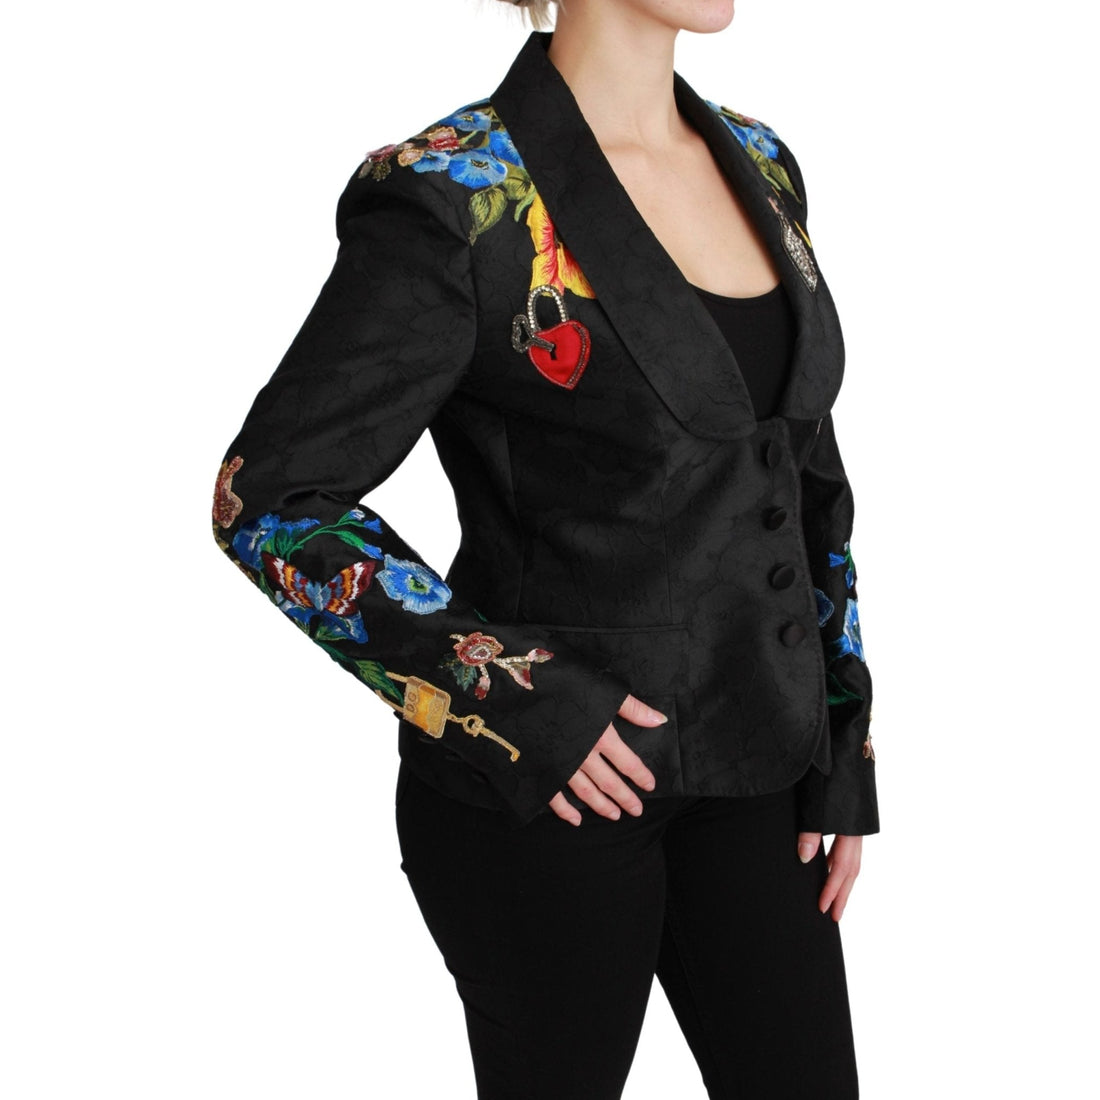 Dolce & Gabbana Black Brocade Crystal Blazer Jacket - Paris Deluxe